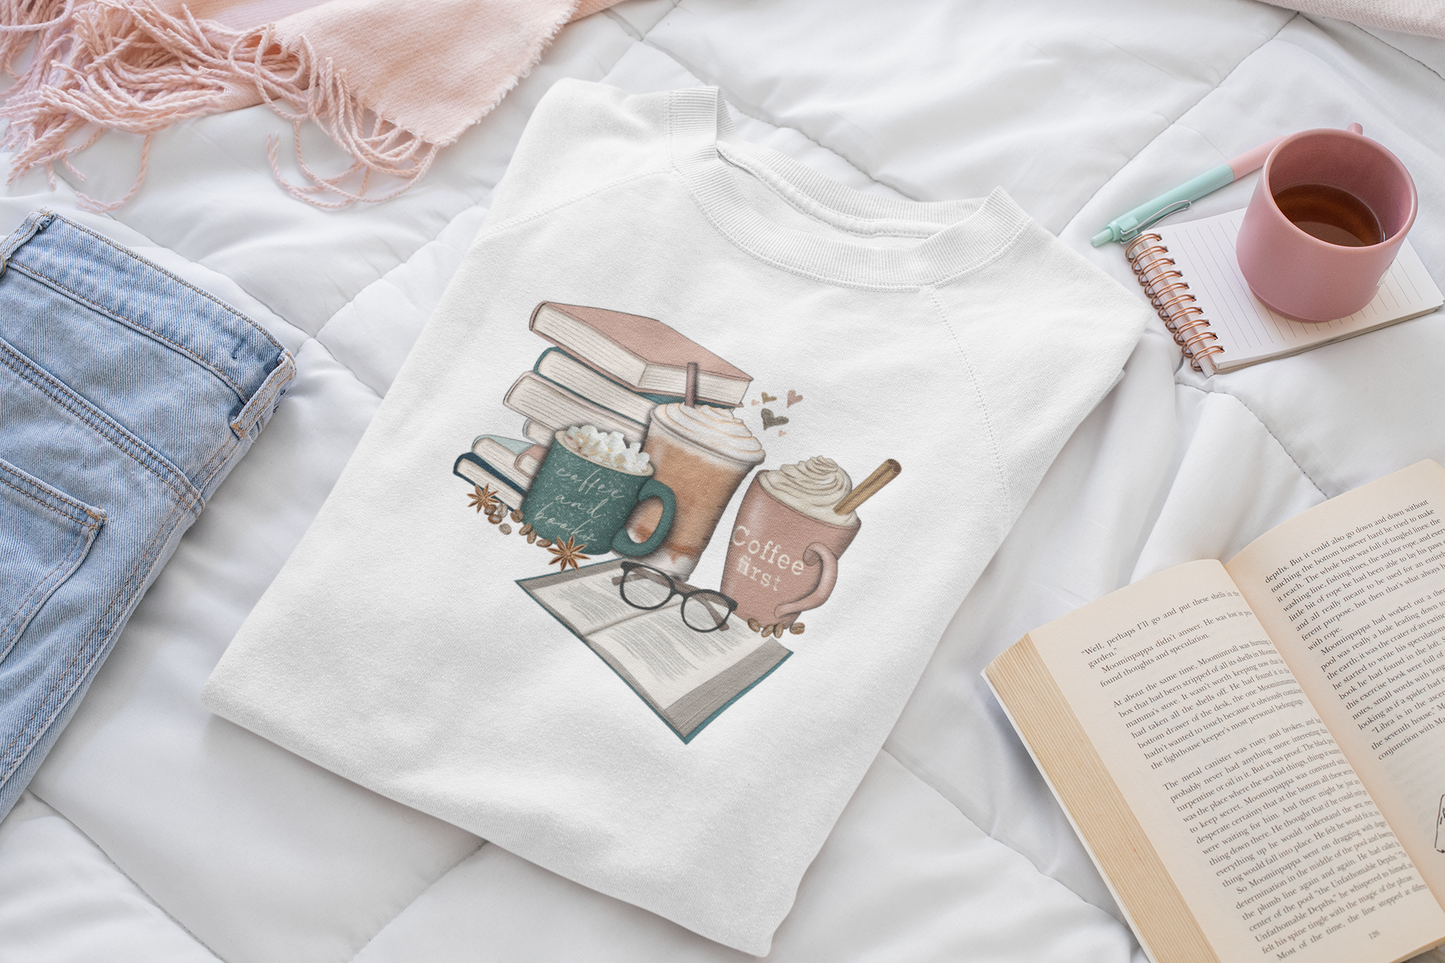 Coffee and Books Sweatshirt